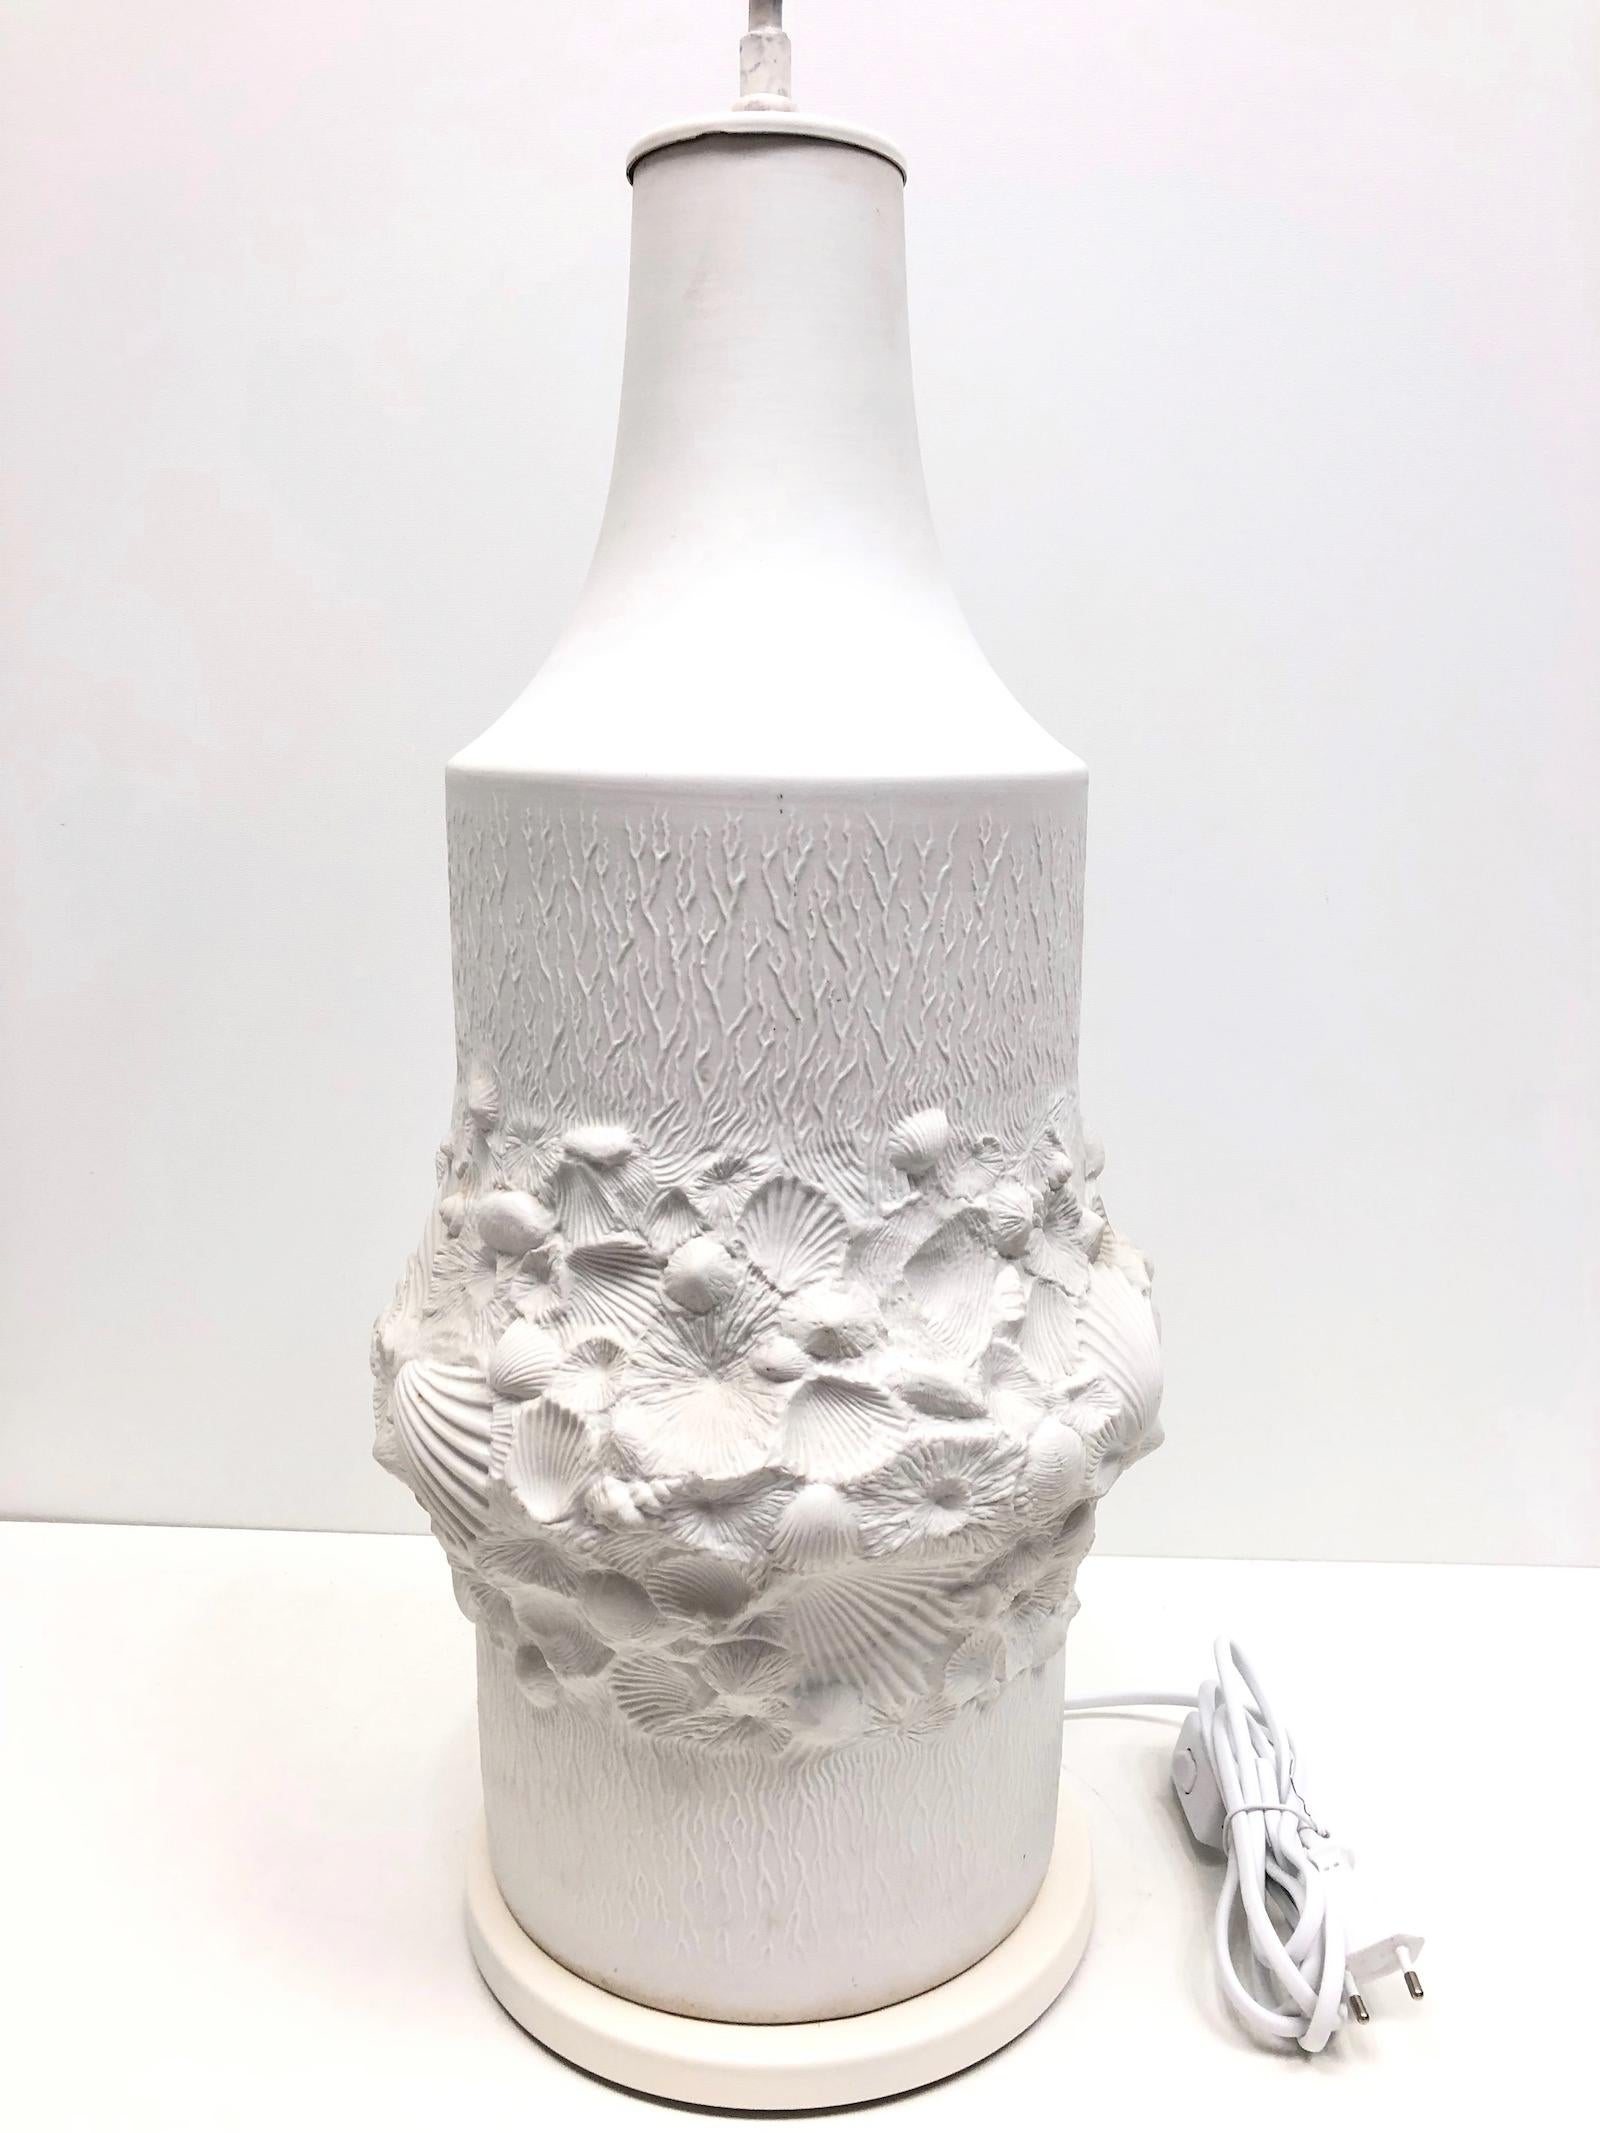 German Monumental Fossil Shell Table Lamp Foot Bisque Porcelain, 1960s Kaiser Porcelain